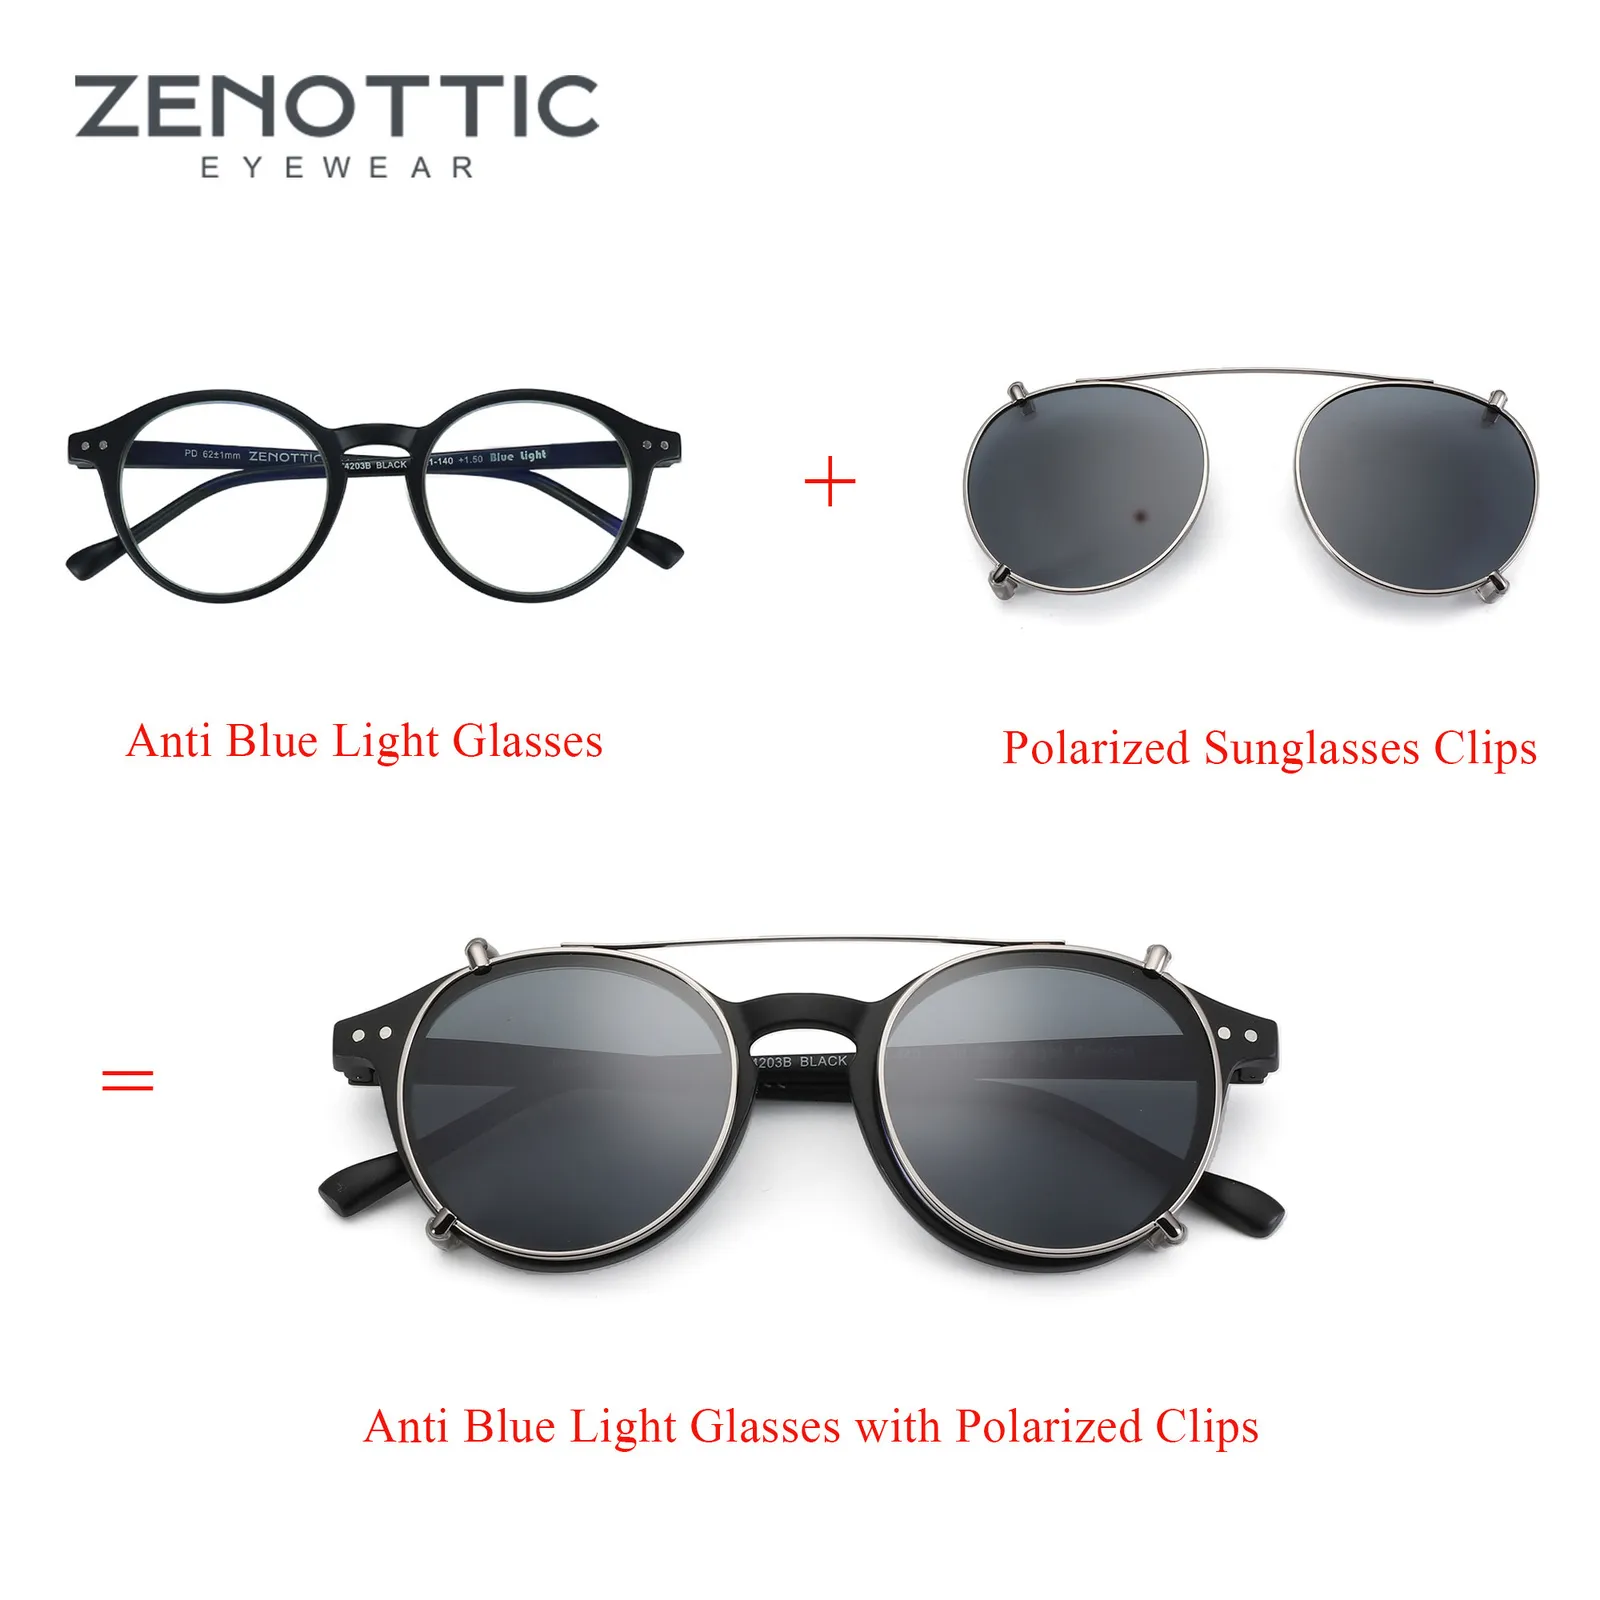 ZENOTTIC Steampunk Style Blue Blocker Sunglasses With Polarized Clip Lenses  For Women And Men Anti Blue Light Eyewear 230606 From Pong04, $10.53